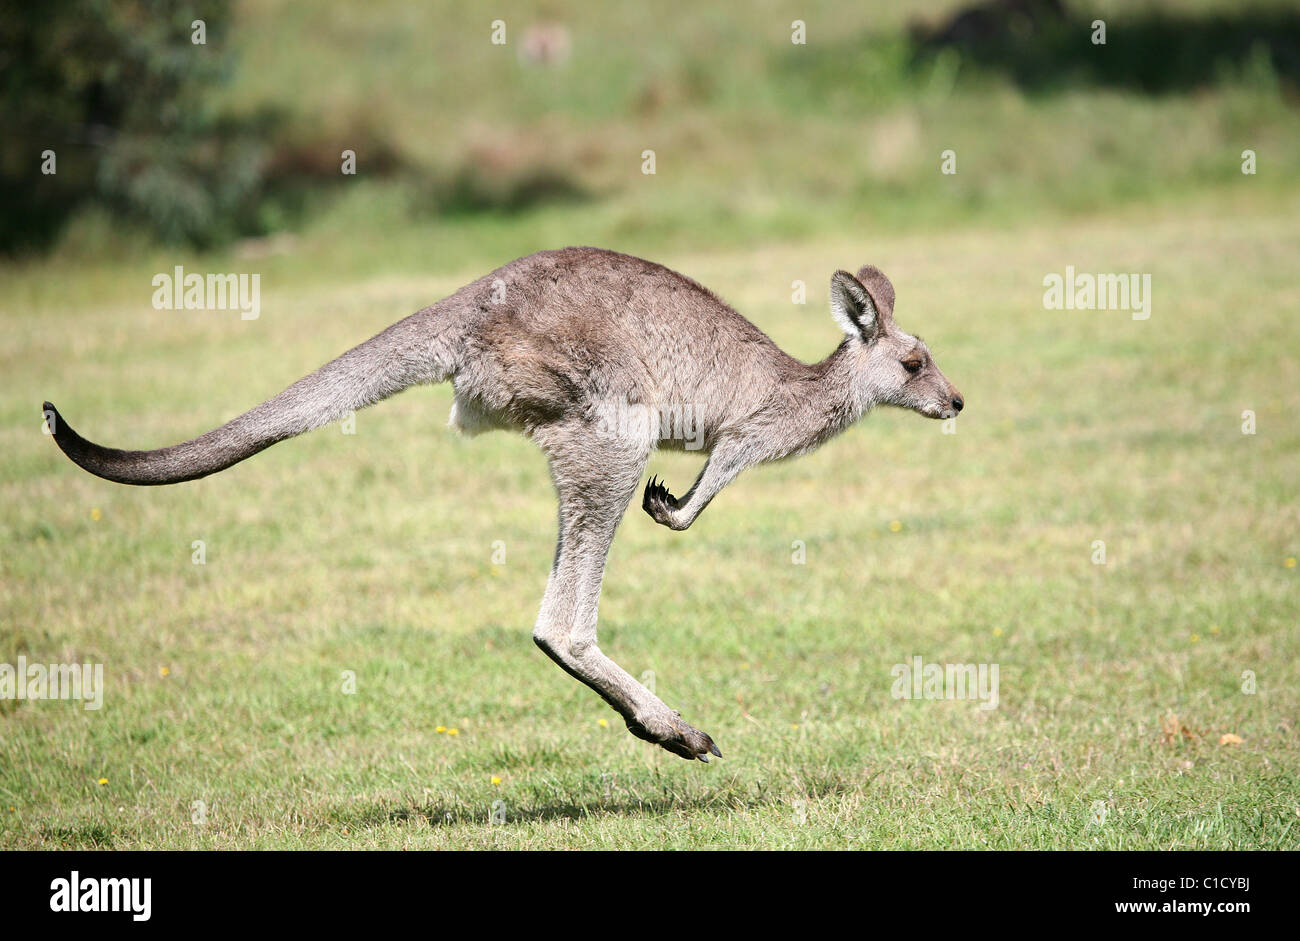 A joey (baby) kangaroo (macropus giganteus) hops across a field. Stock Photo